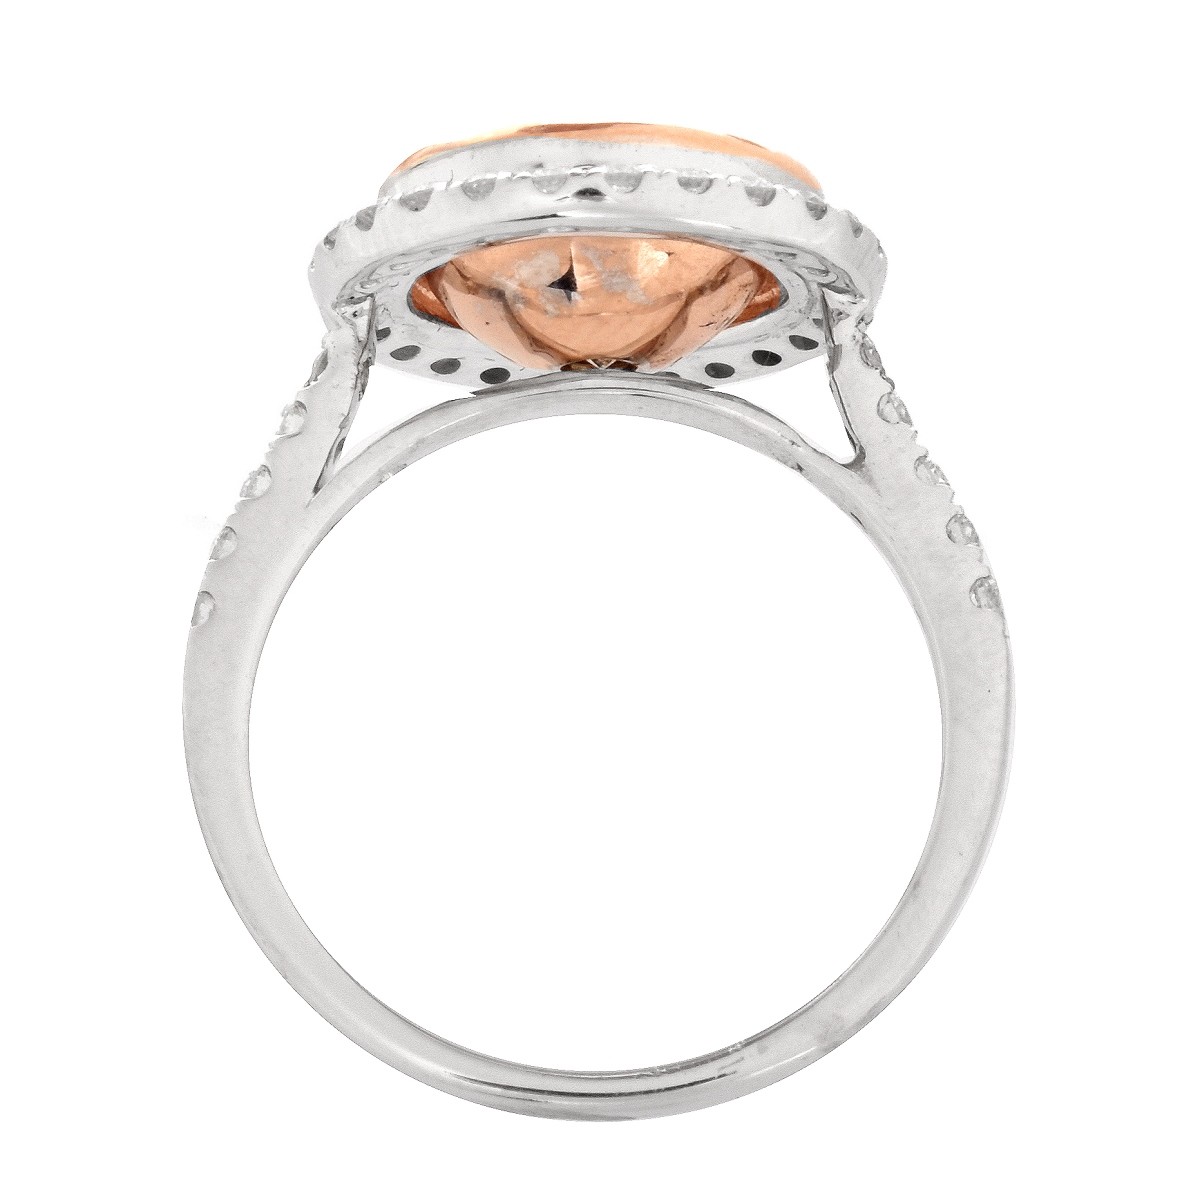 3.02ct Fancy Pinkish Brown Diamond Ring